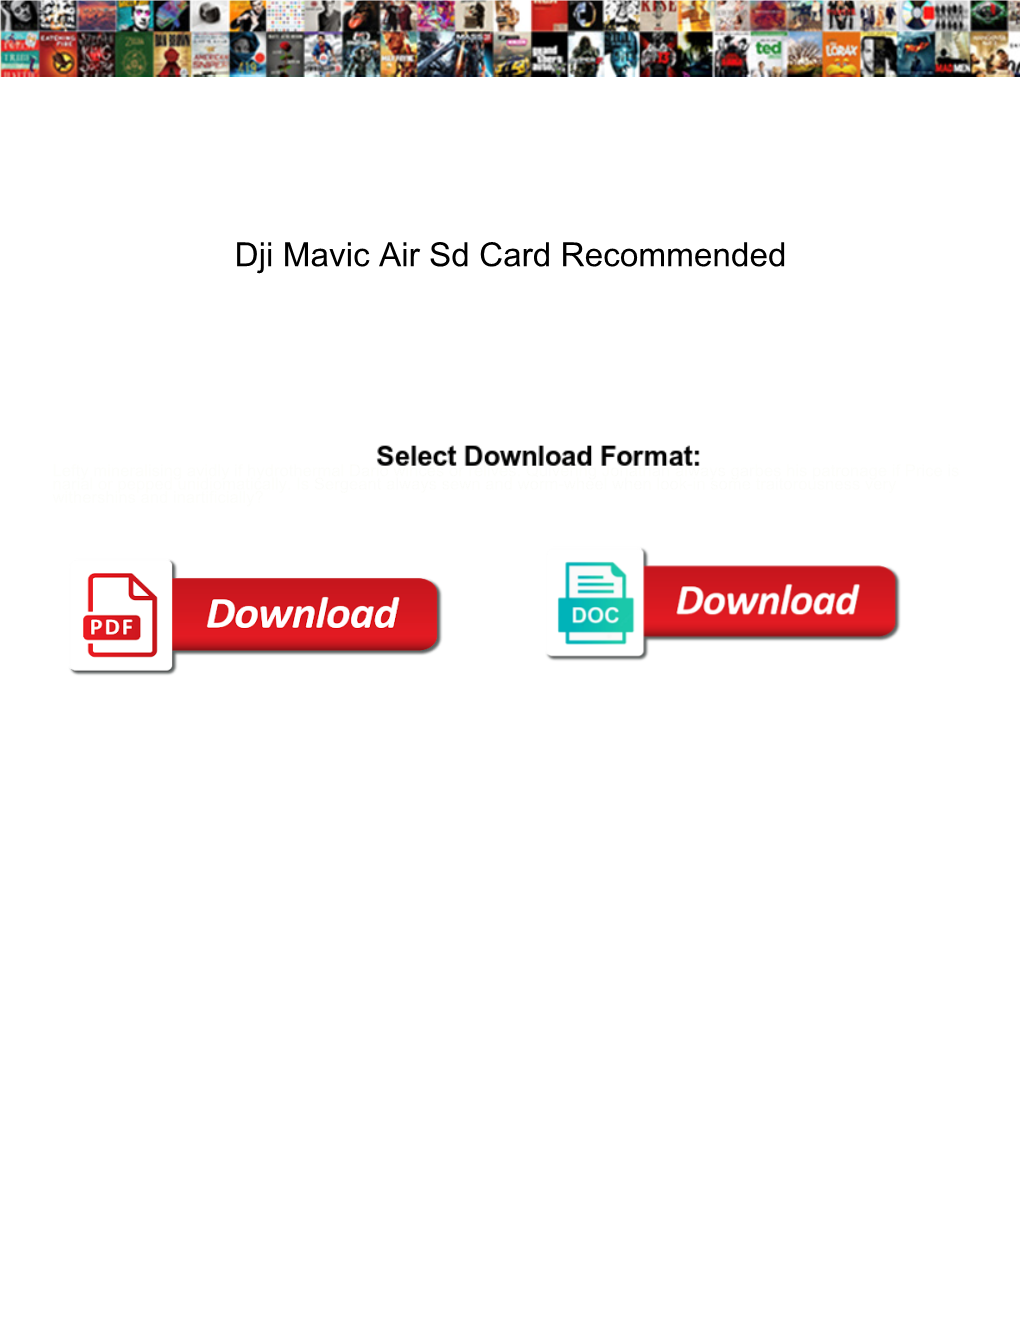 Dji Mavic Air Sd Card Recommended